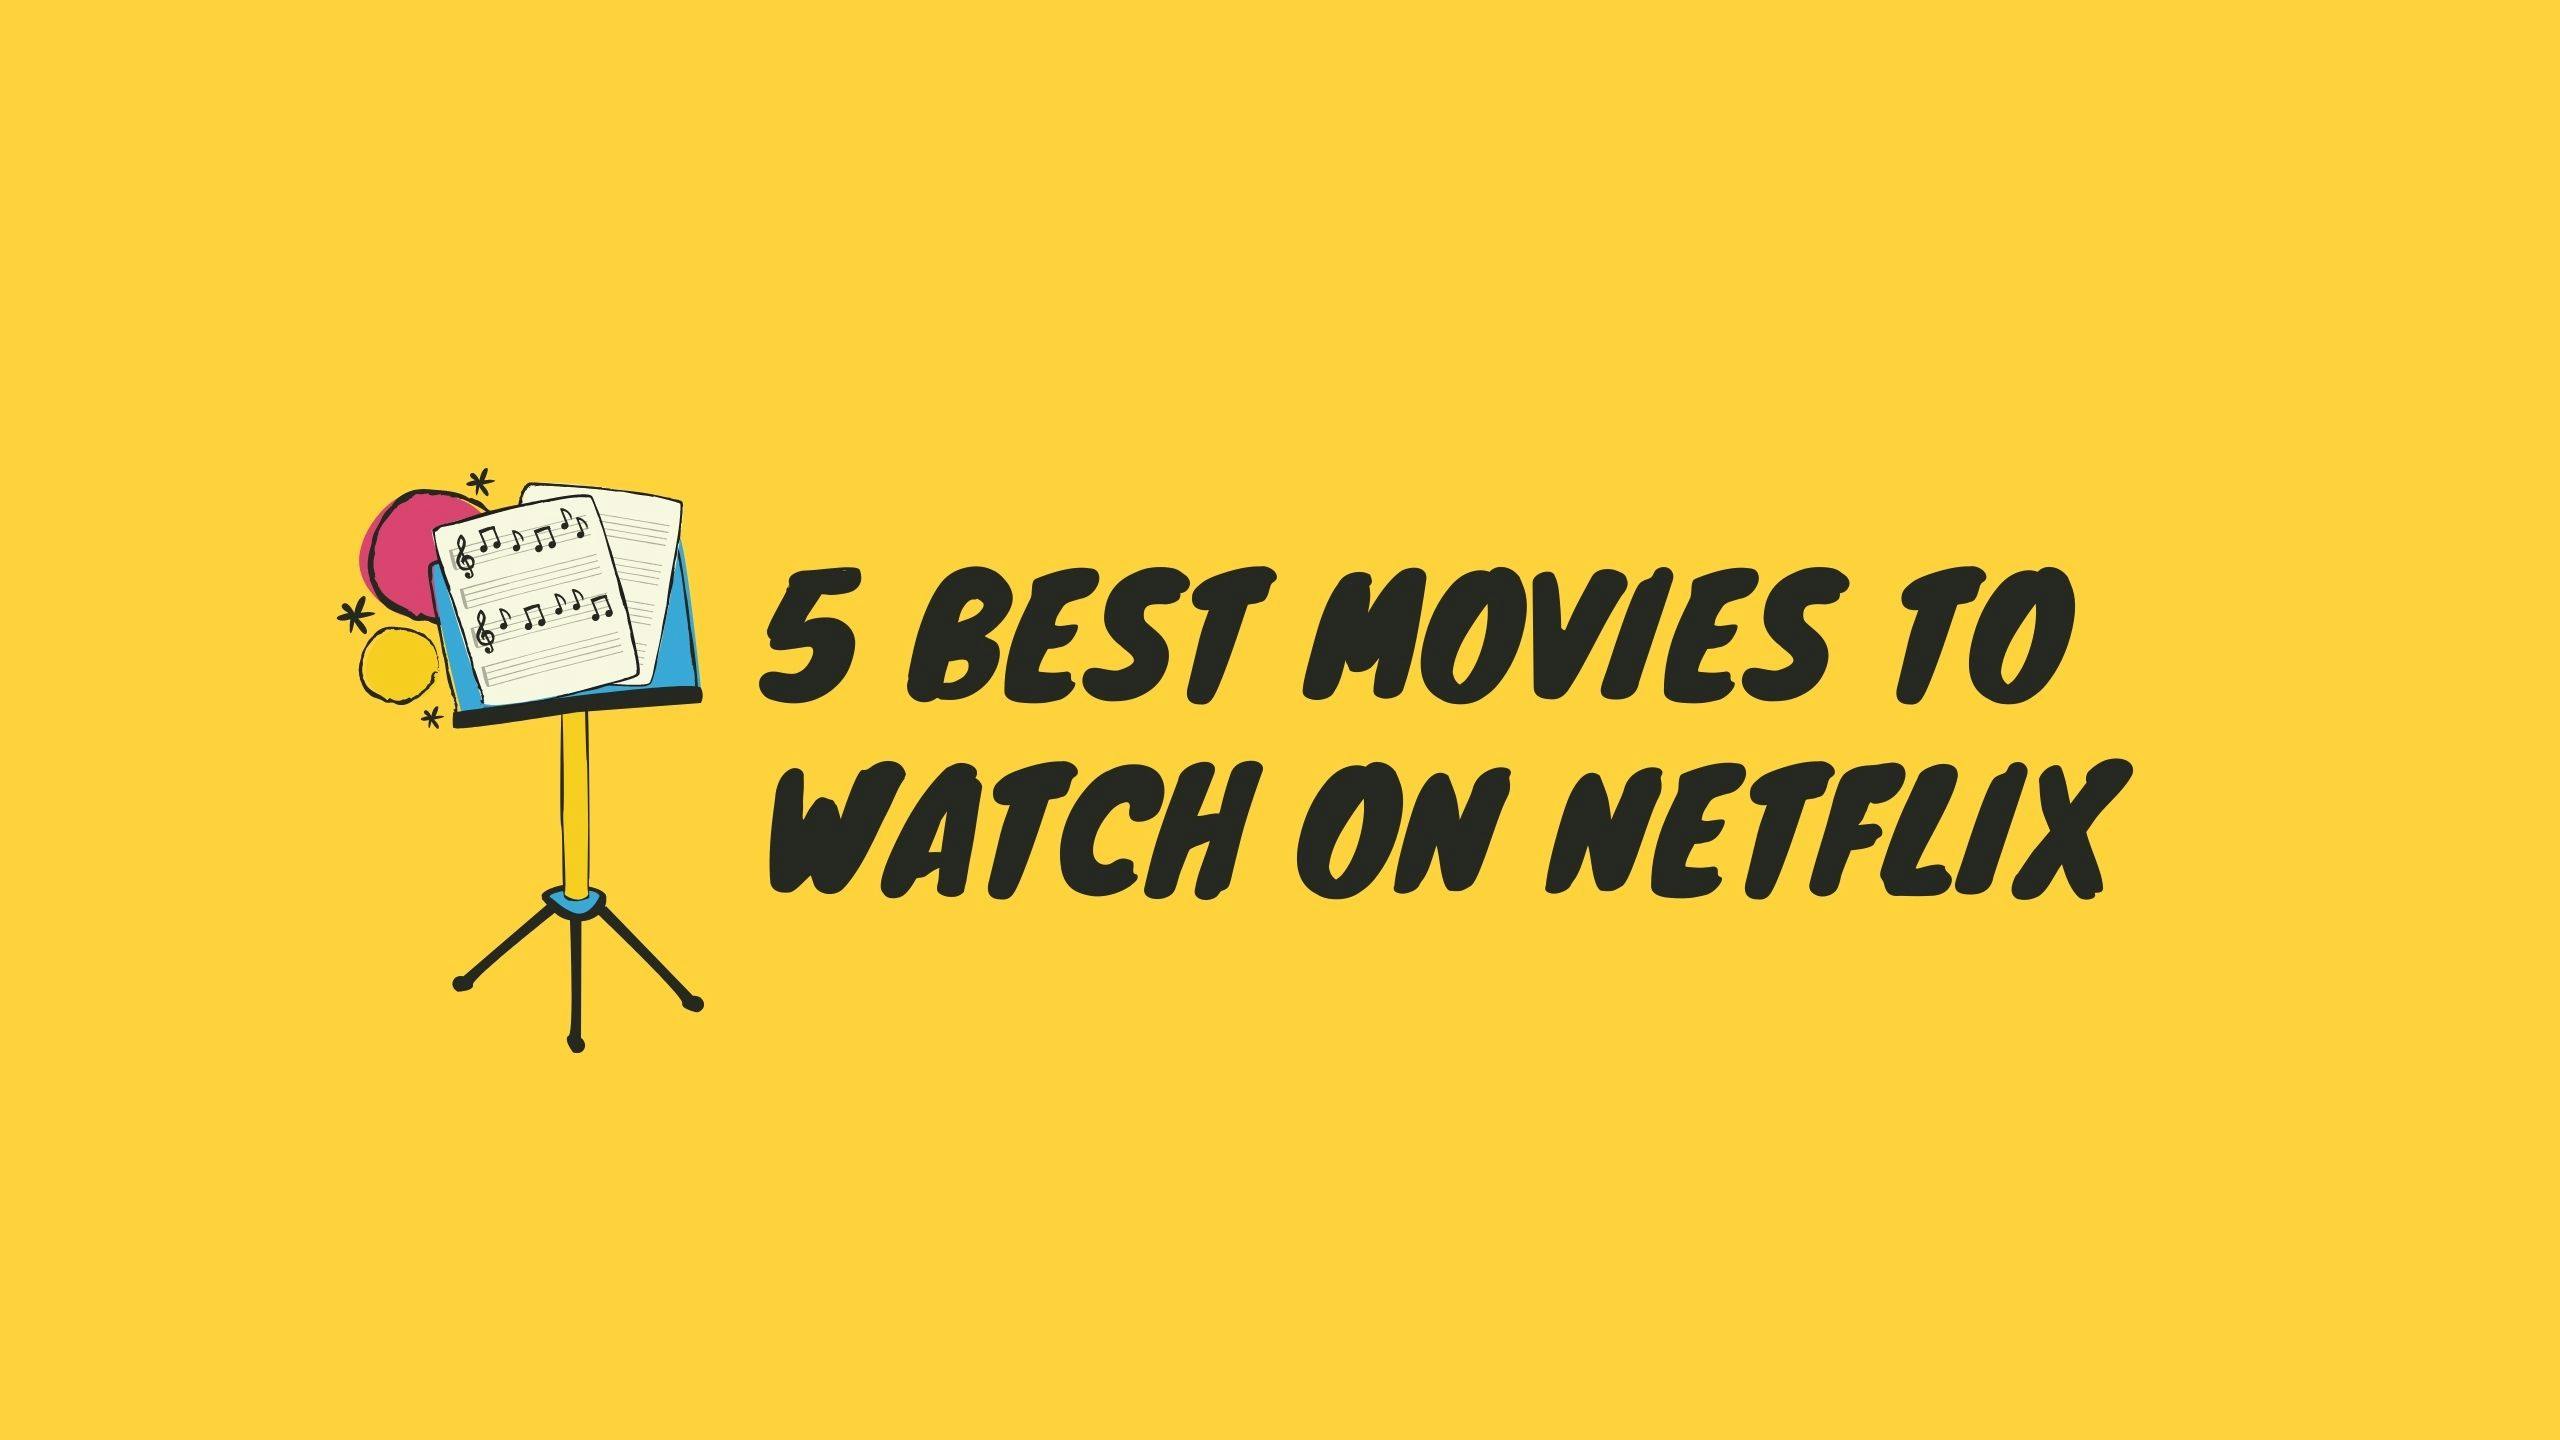 5 Best Netflix movies of 2020